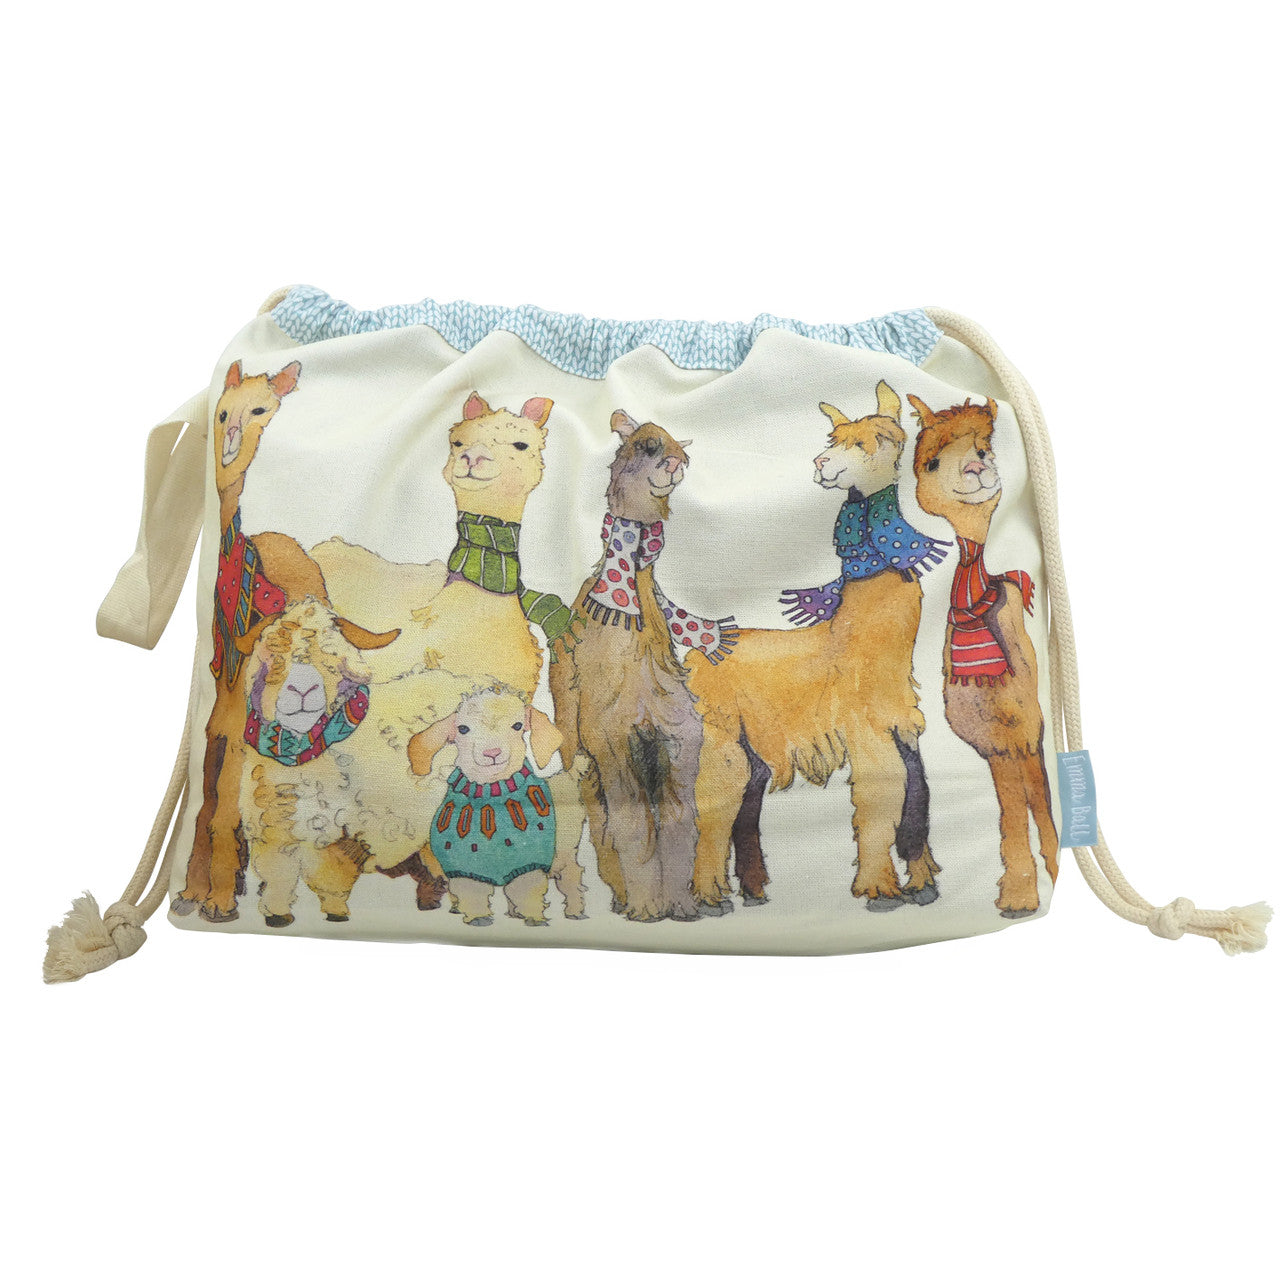 Alpaca & Friends Drawstring Cotton Bag from Emma Ball.